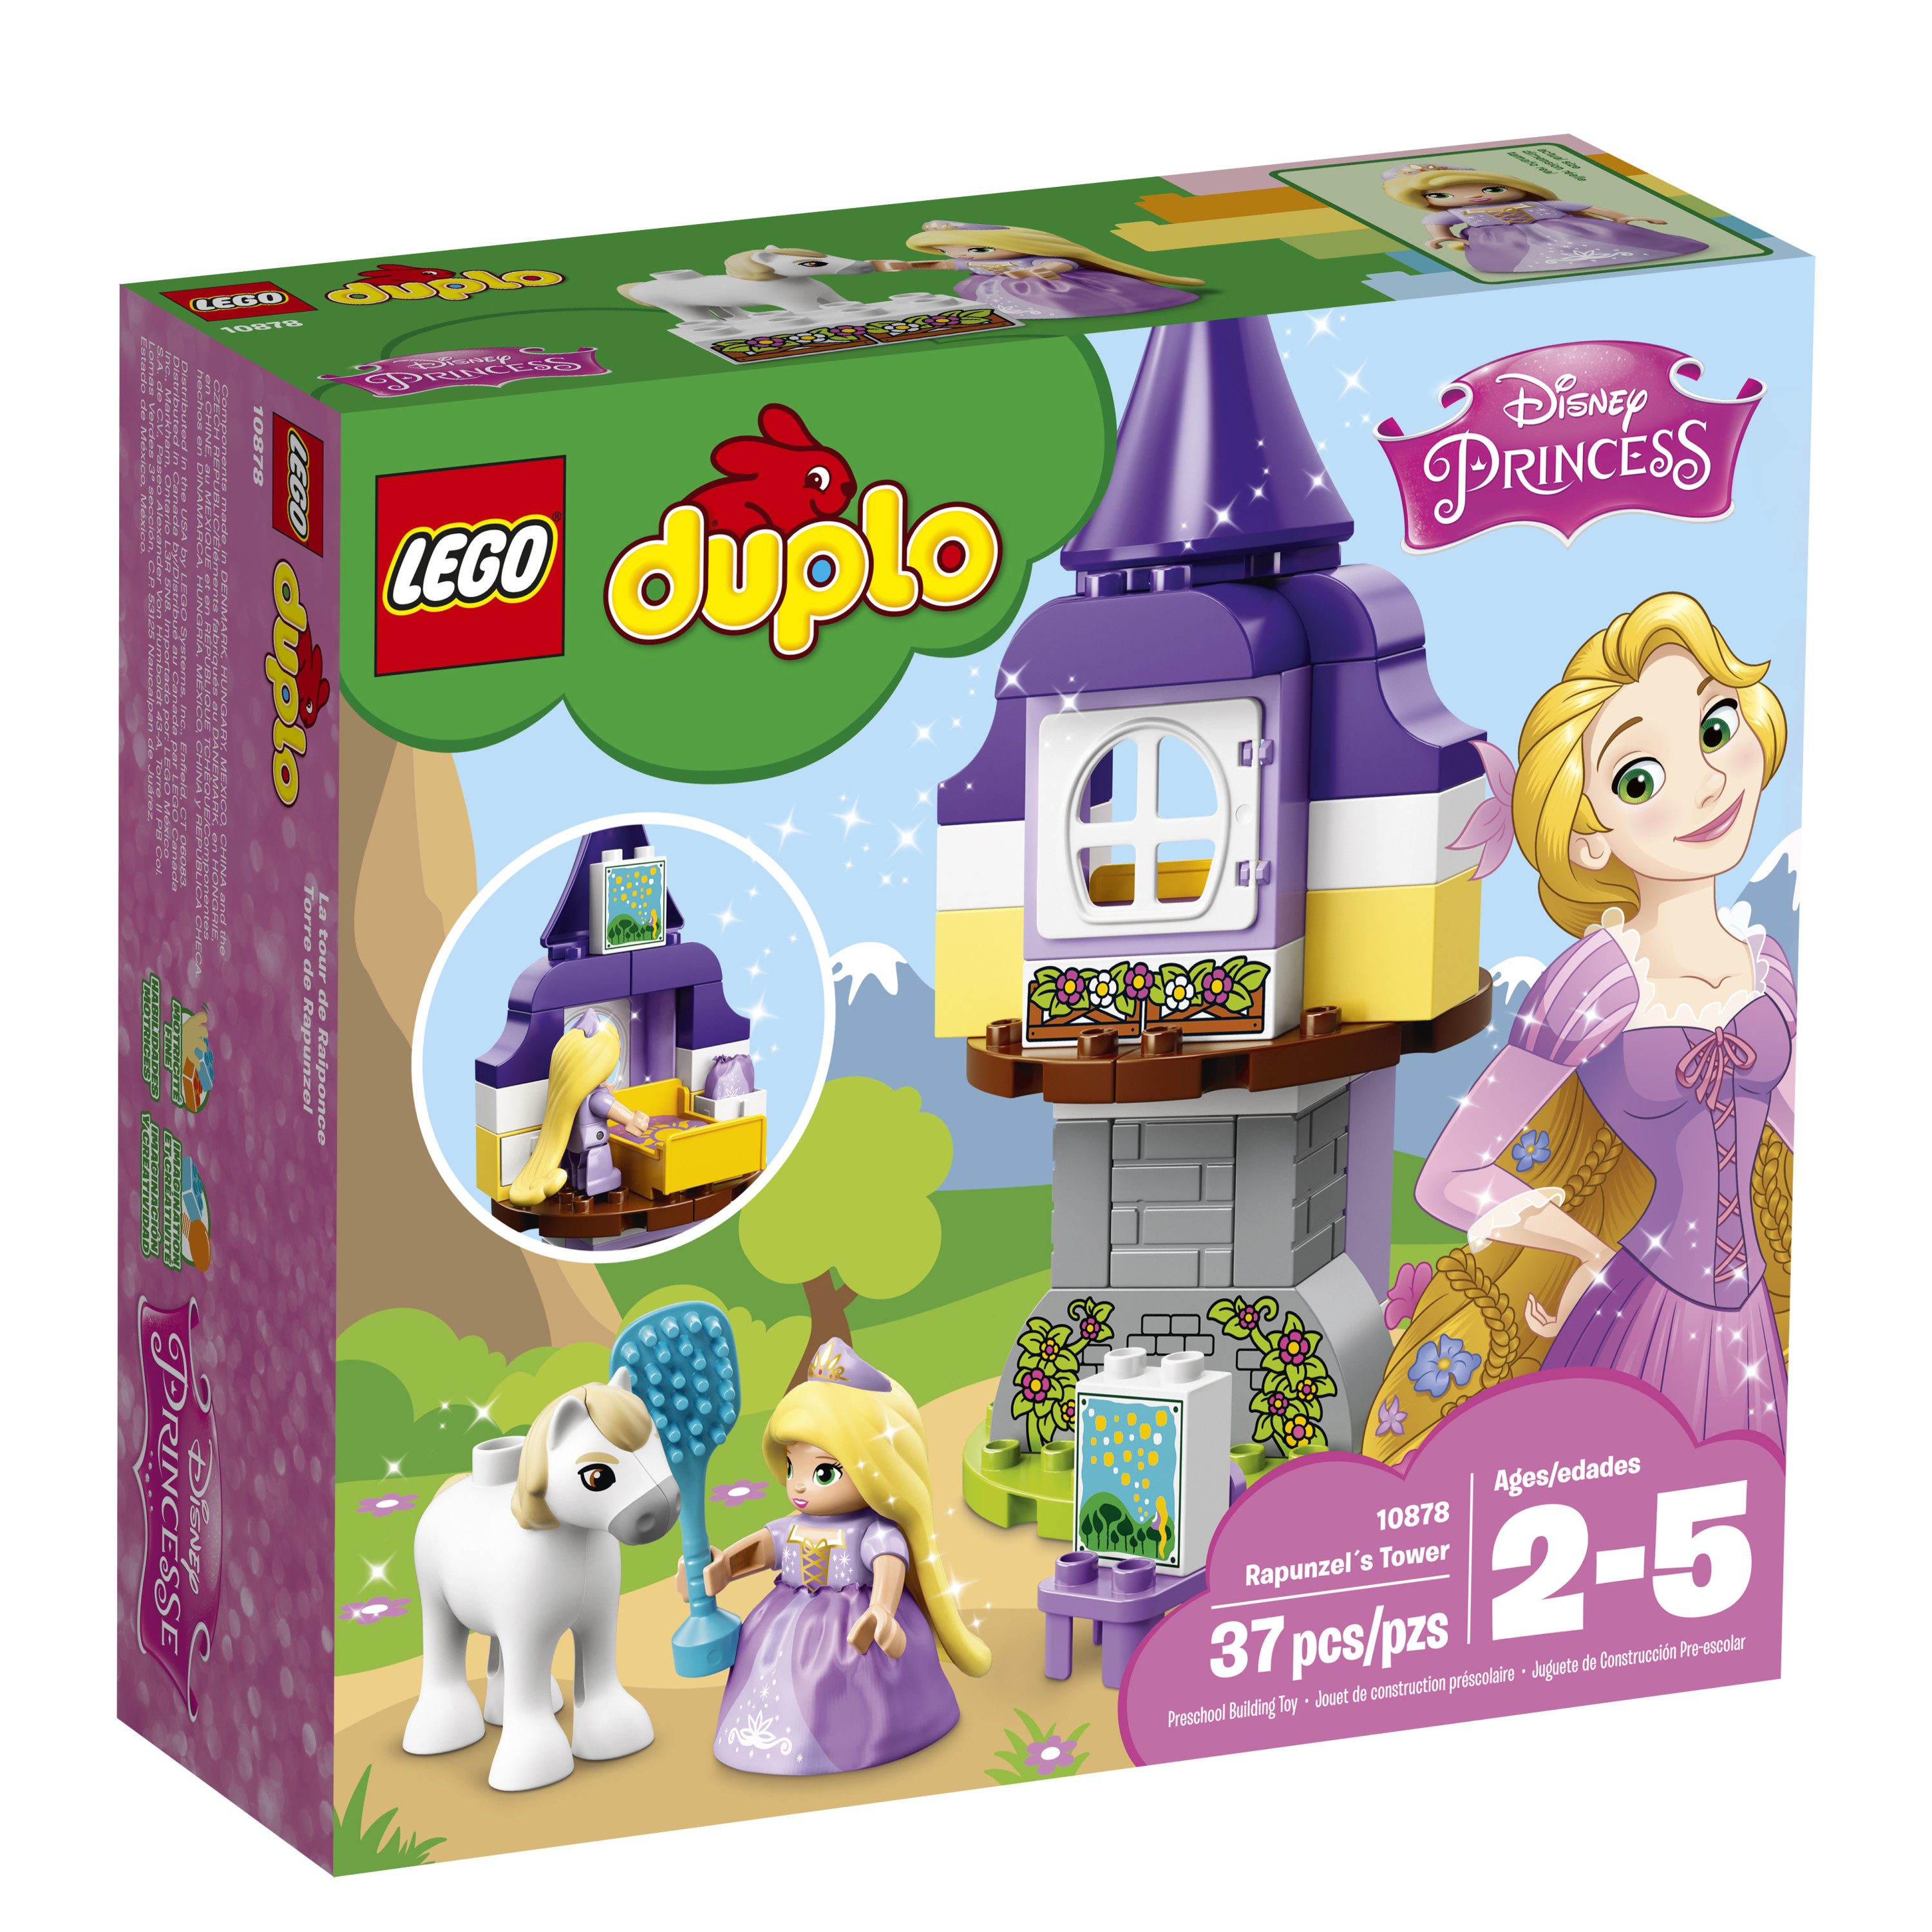 LEGO DUPLO Princess? Rapunzel´s Tower 10878 (37 Pieces) - image 3 of 6